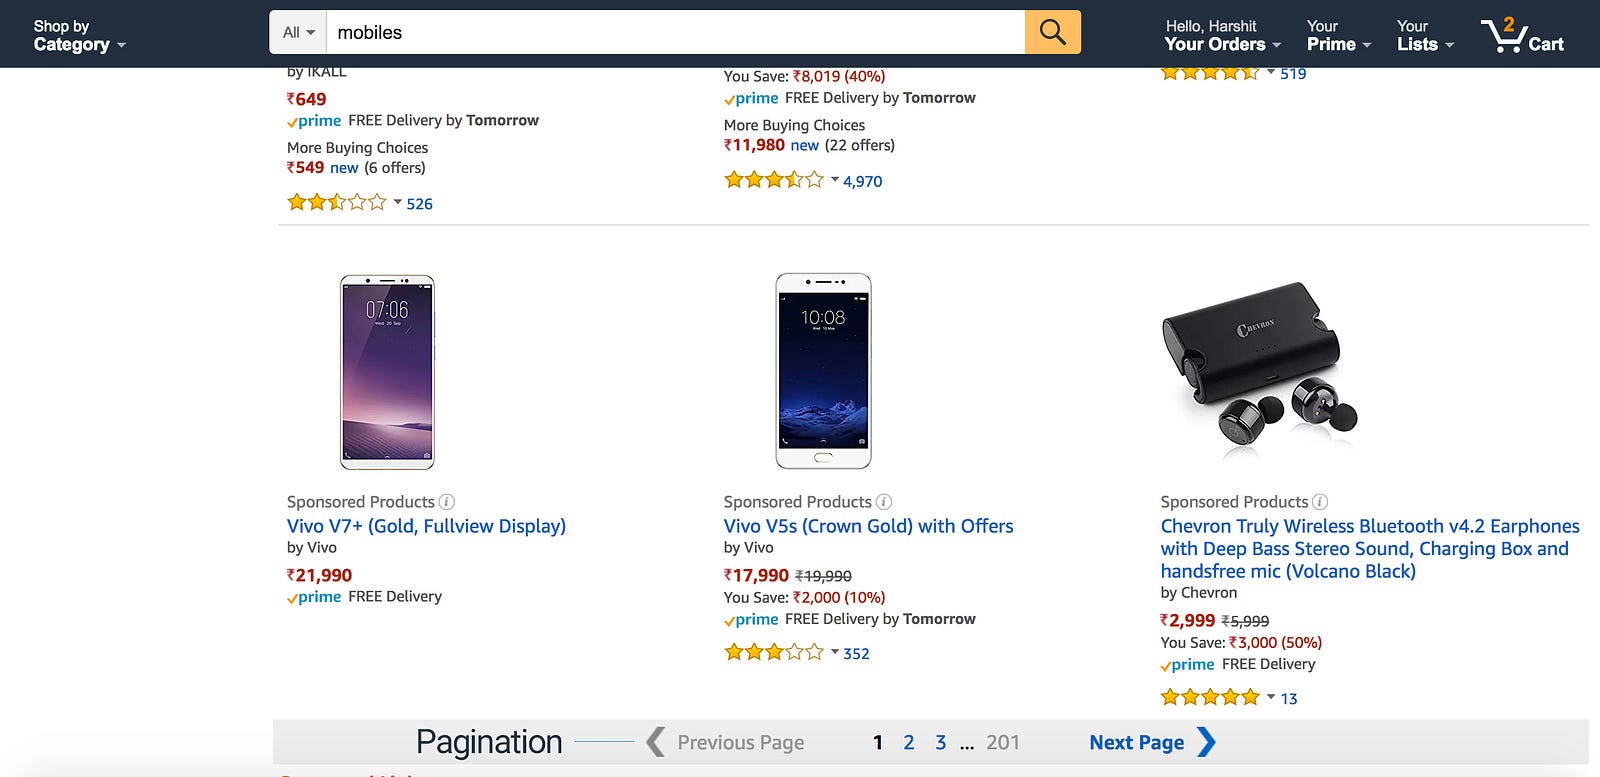 Product listing on Amazon